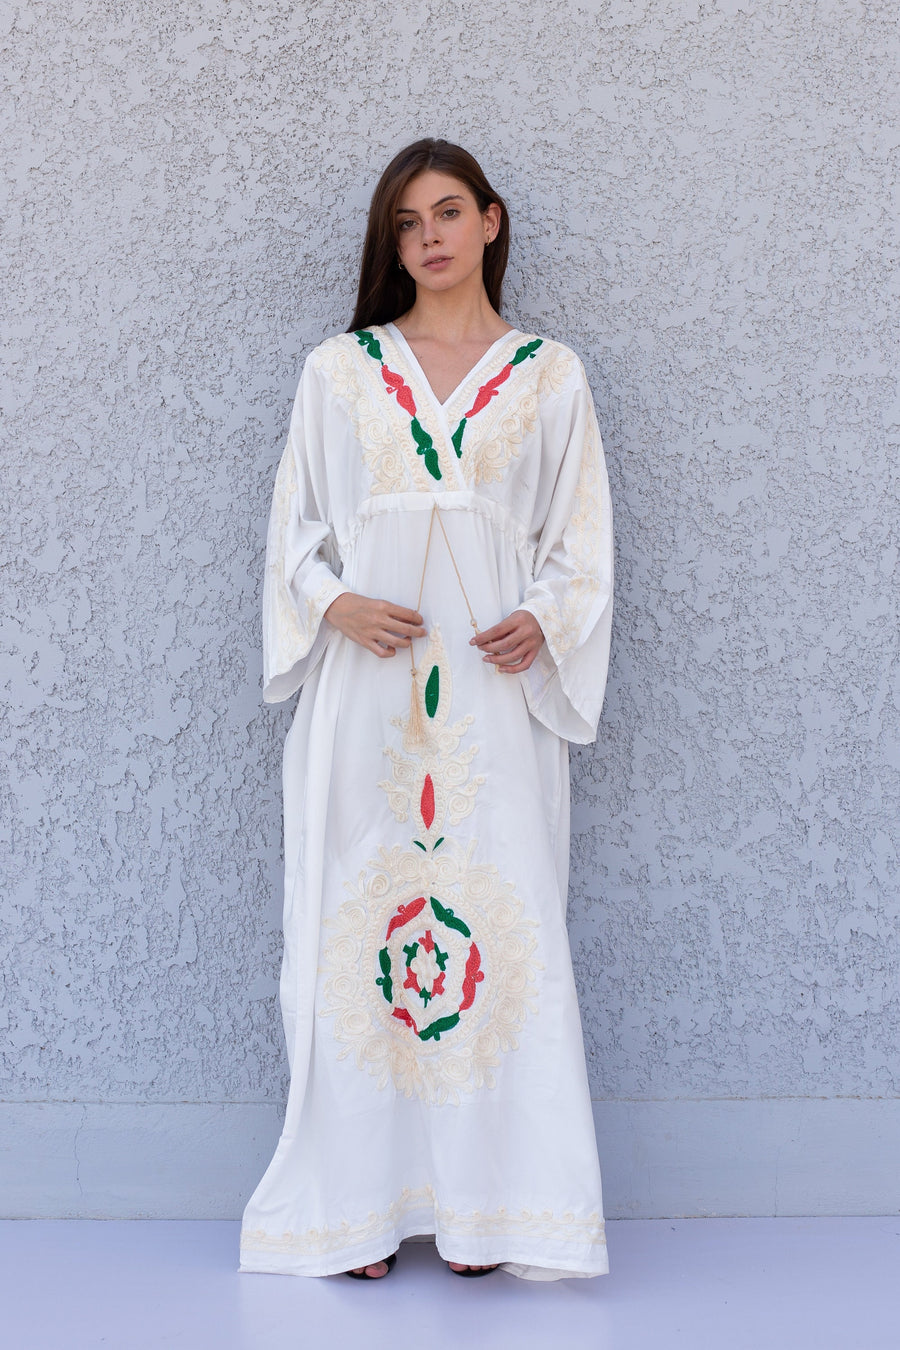 White Embroidered kaftan dress, cotton Kaftan dress, Unique embroidered kaftan, women kaftans, caftans for women, caftans, summer kaftans